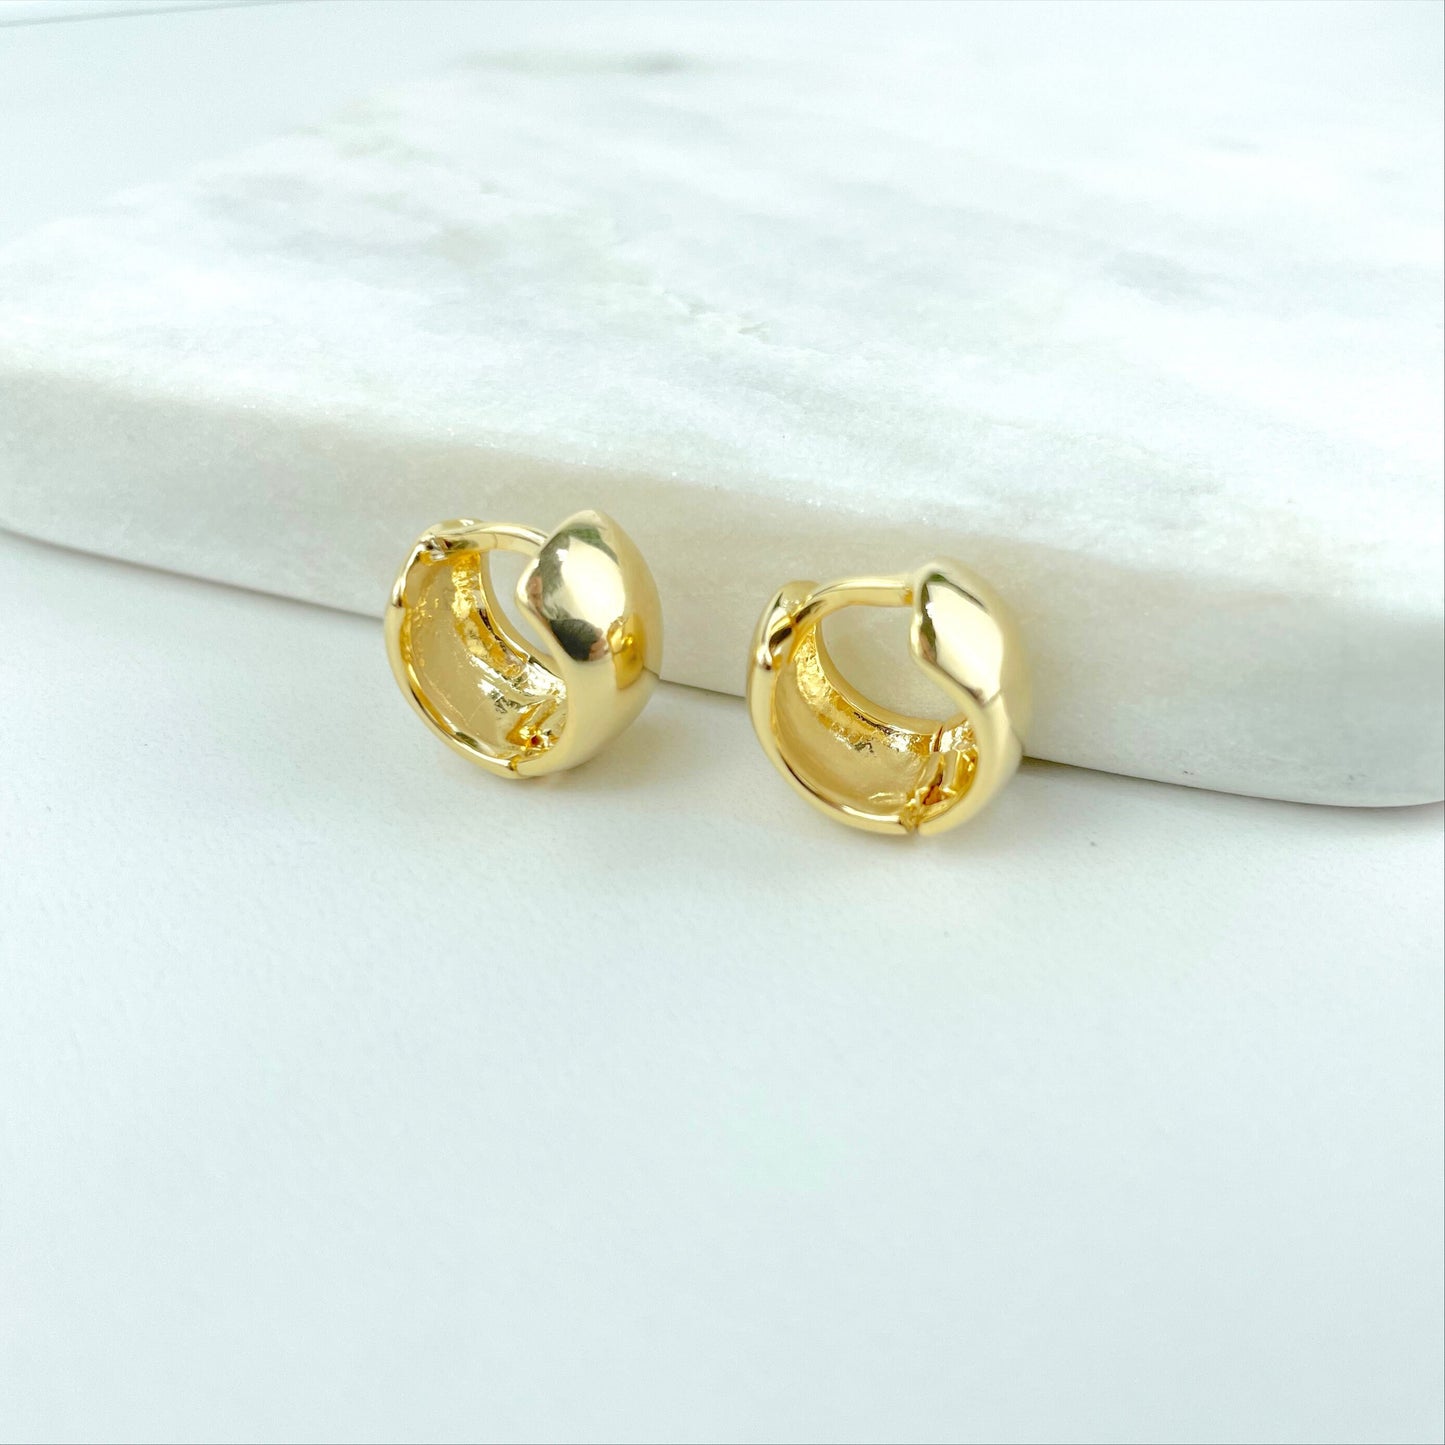 18k Gold Filled 15mm Petite Clicker Earrings Huggies Gold Hoops Dainty Wholesale Jewelry Making Supplies